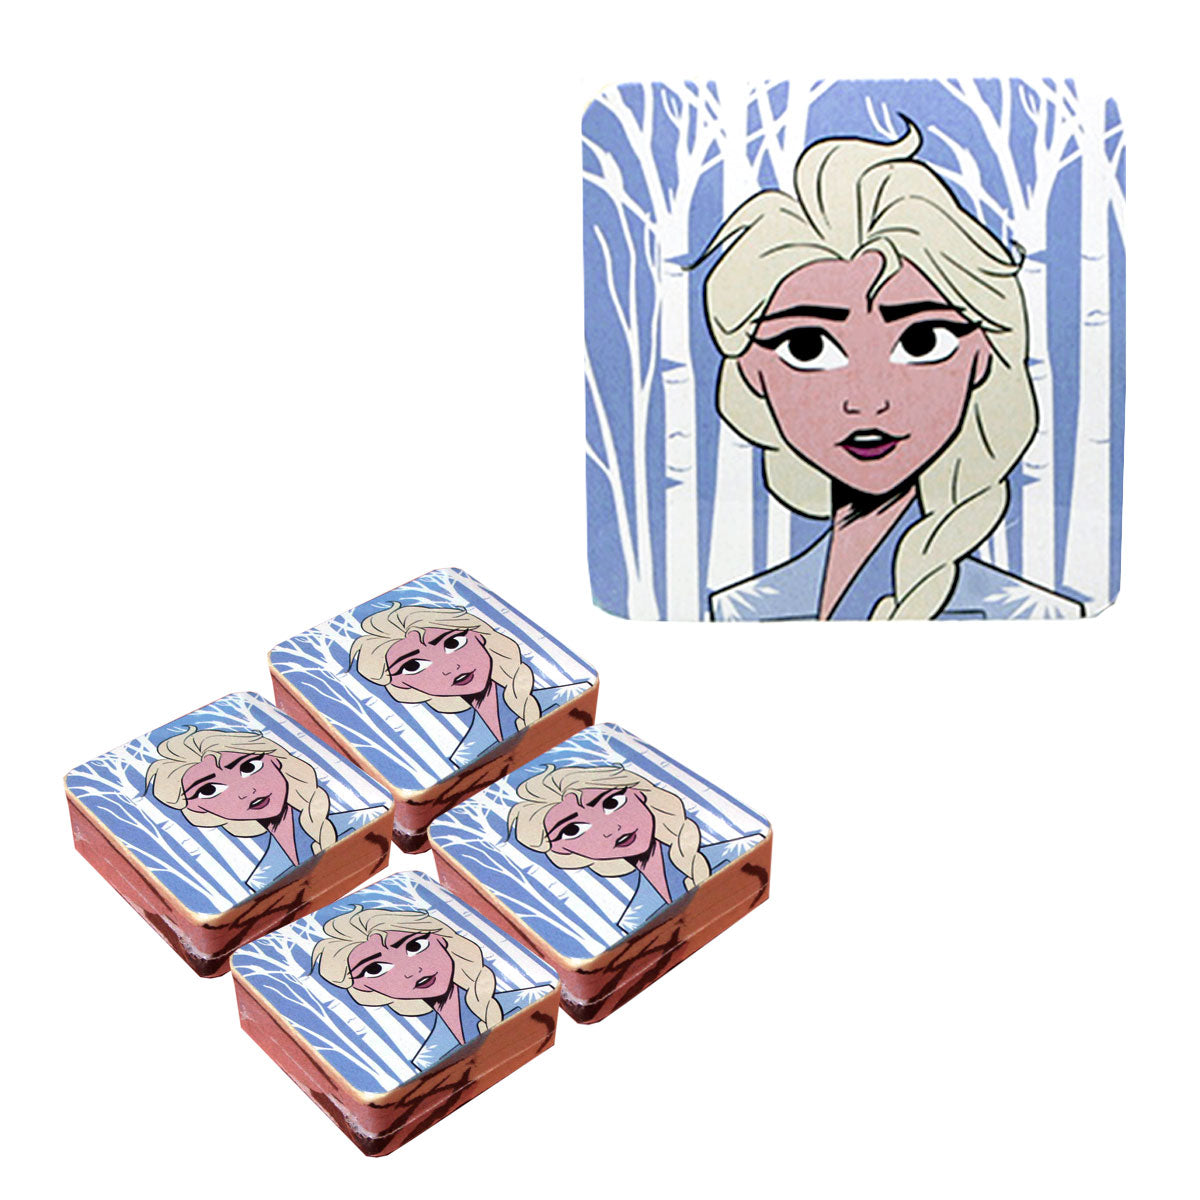 Caprice Frozen Elsa Set of 4 Cotton Licensed Magic Facewashers 30 x 30 cm